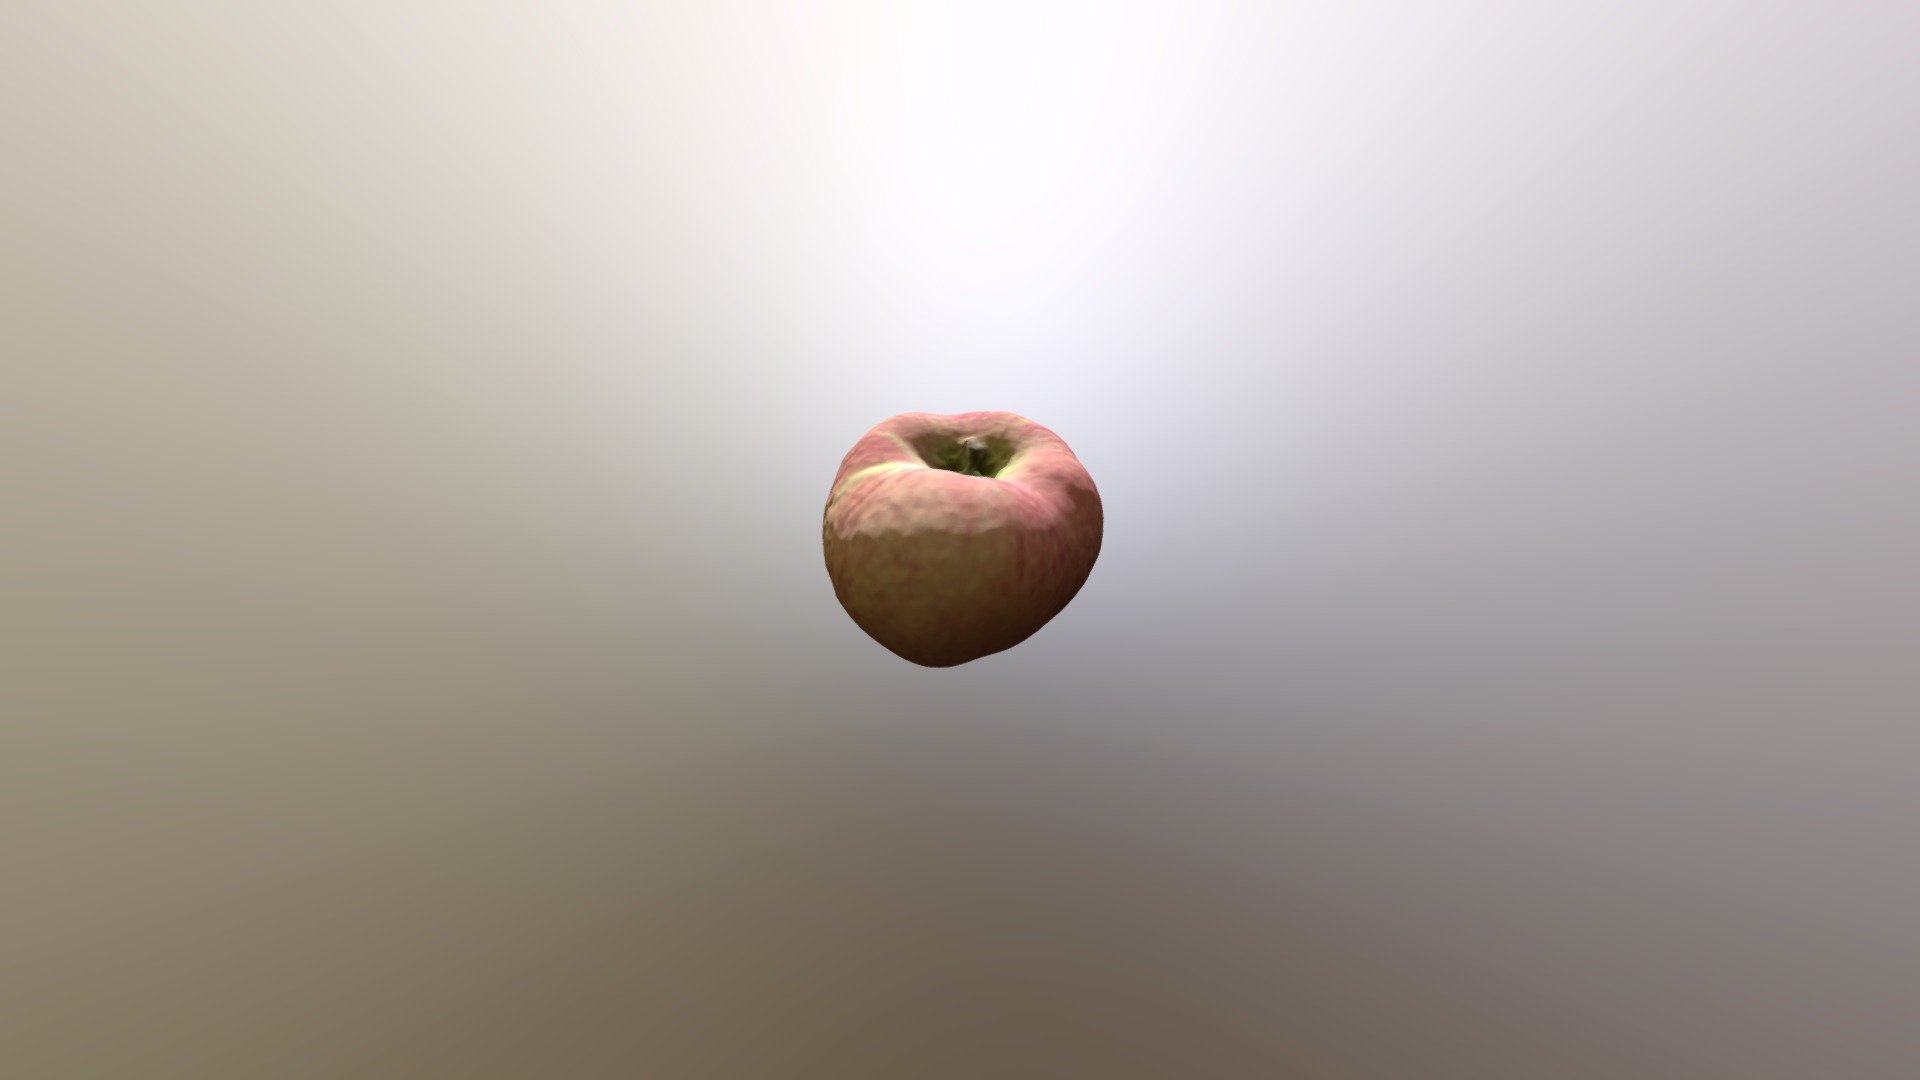 slightly an apple